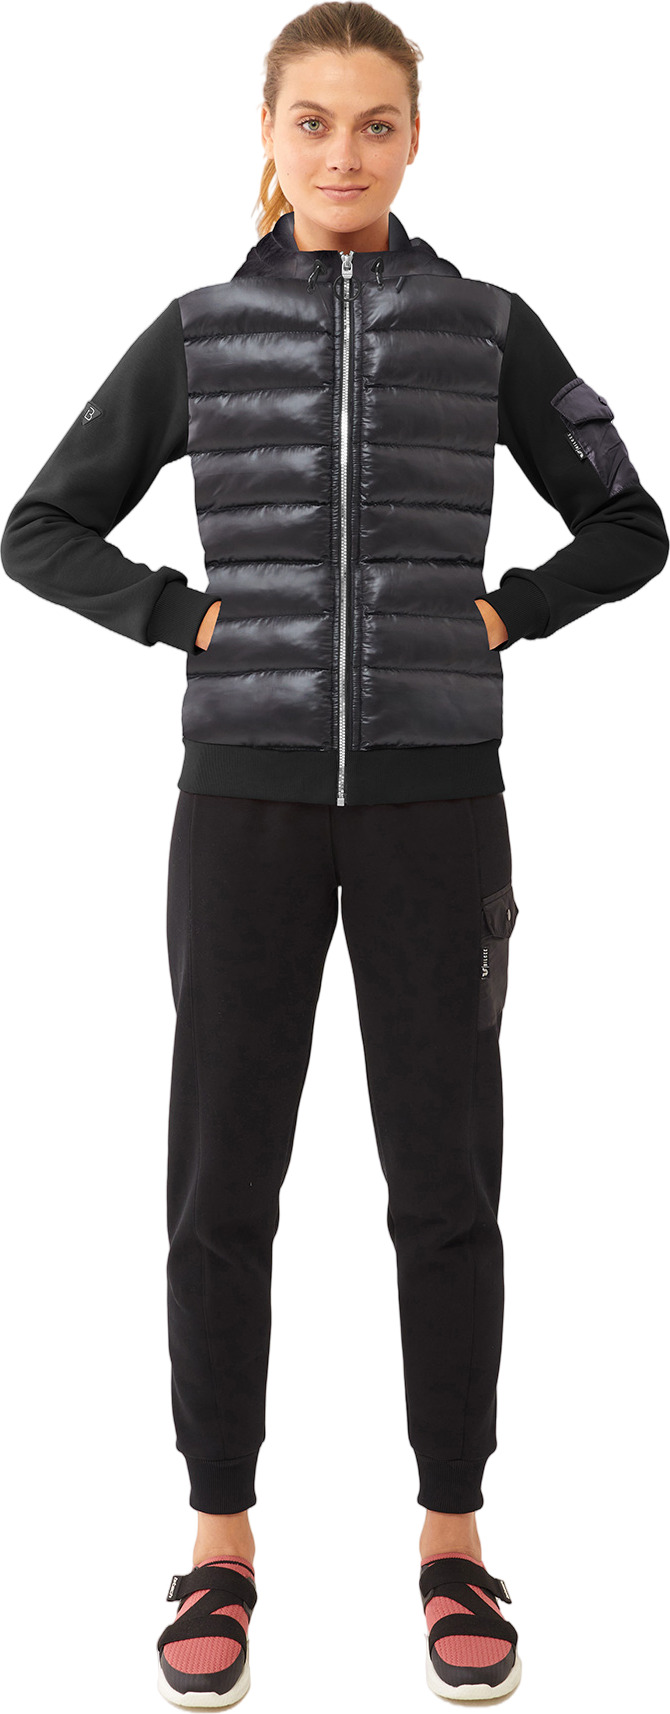 Костюм женский Bilcee Insulated sports suit черный S